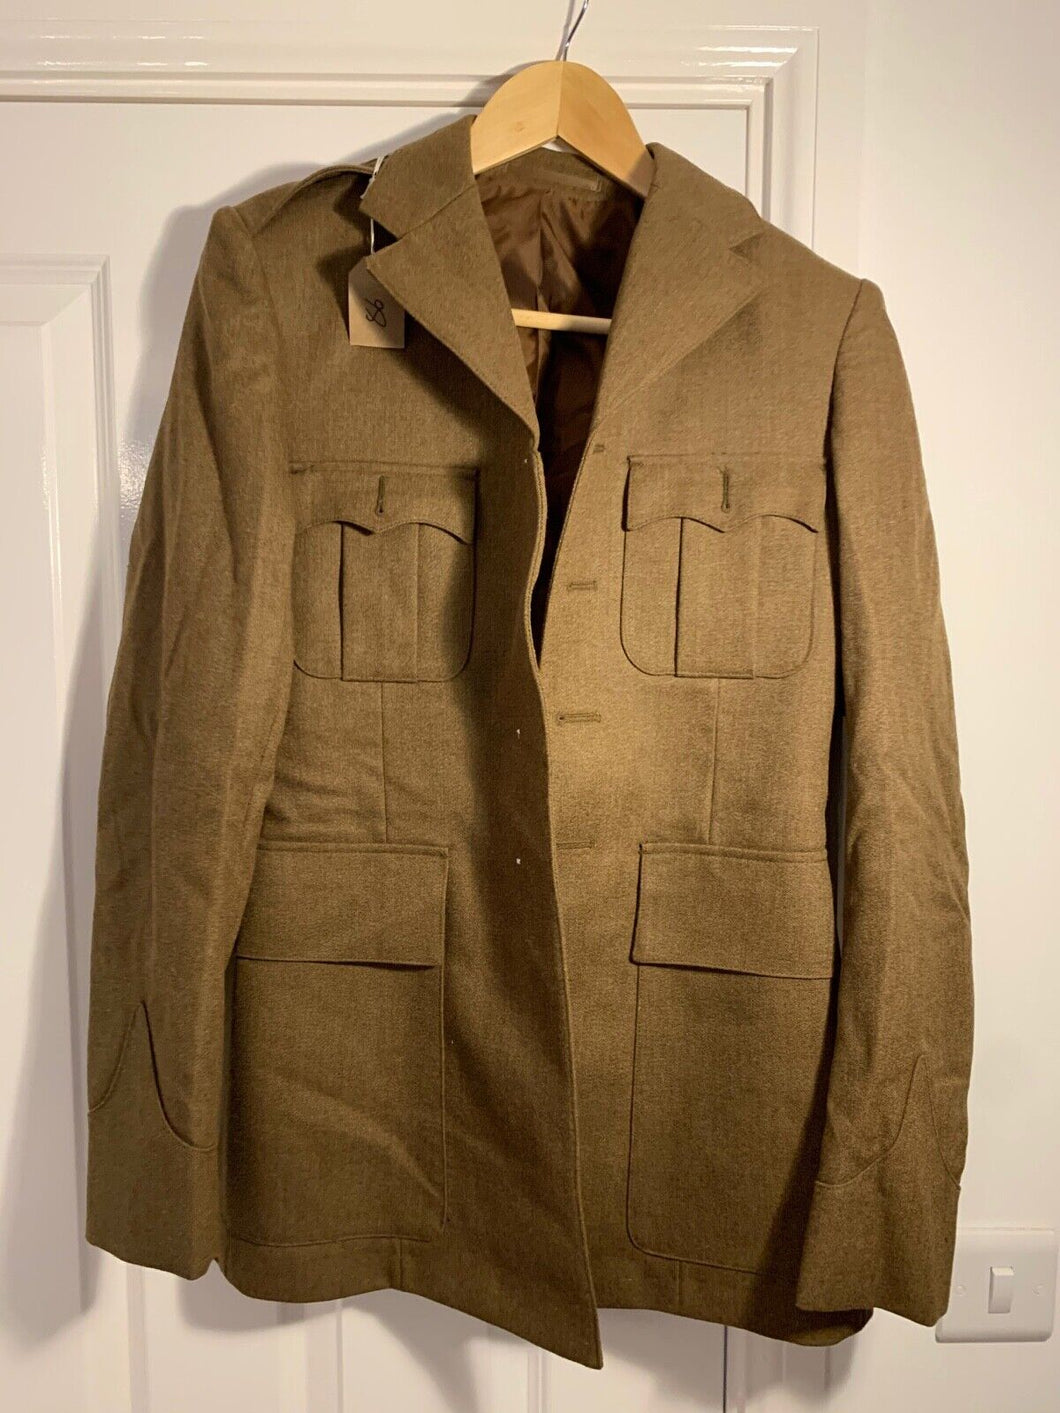 British Army No 2 Dress Uniform Jacket / Tunic - Unissued! - H176/C84/W72 - #86